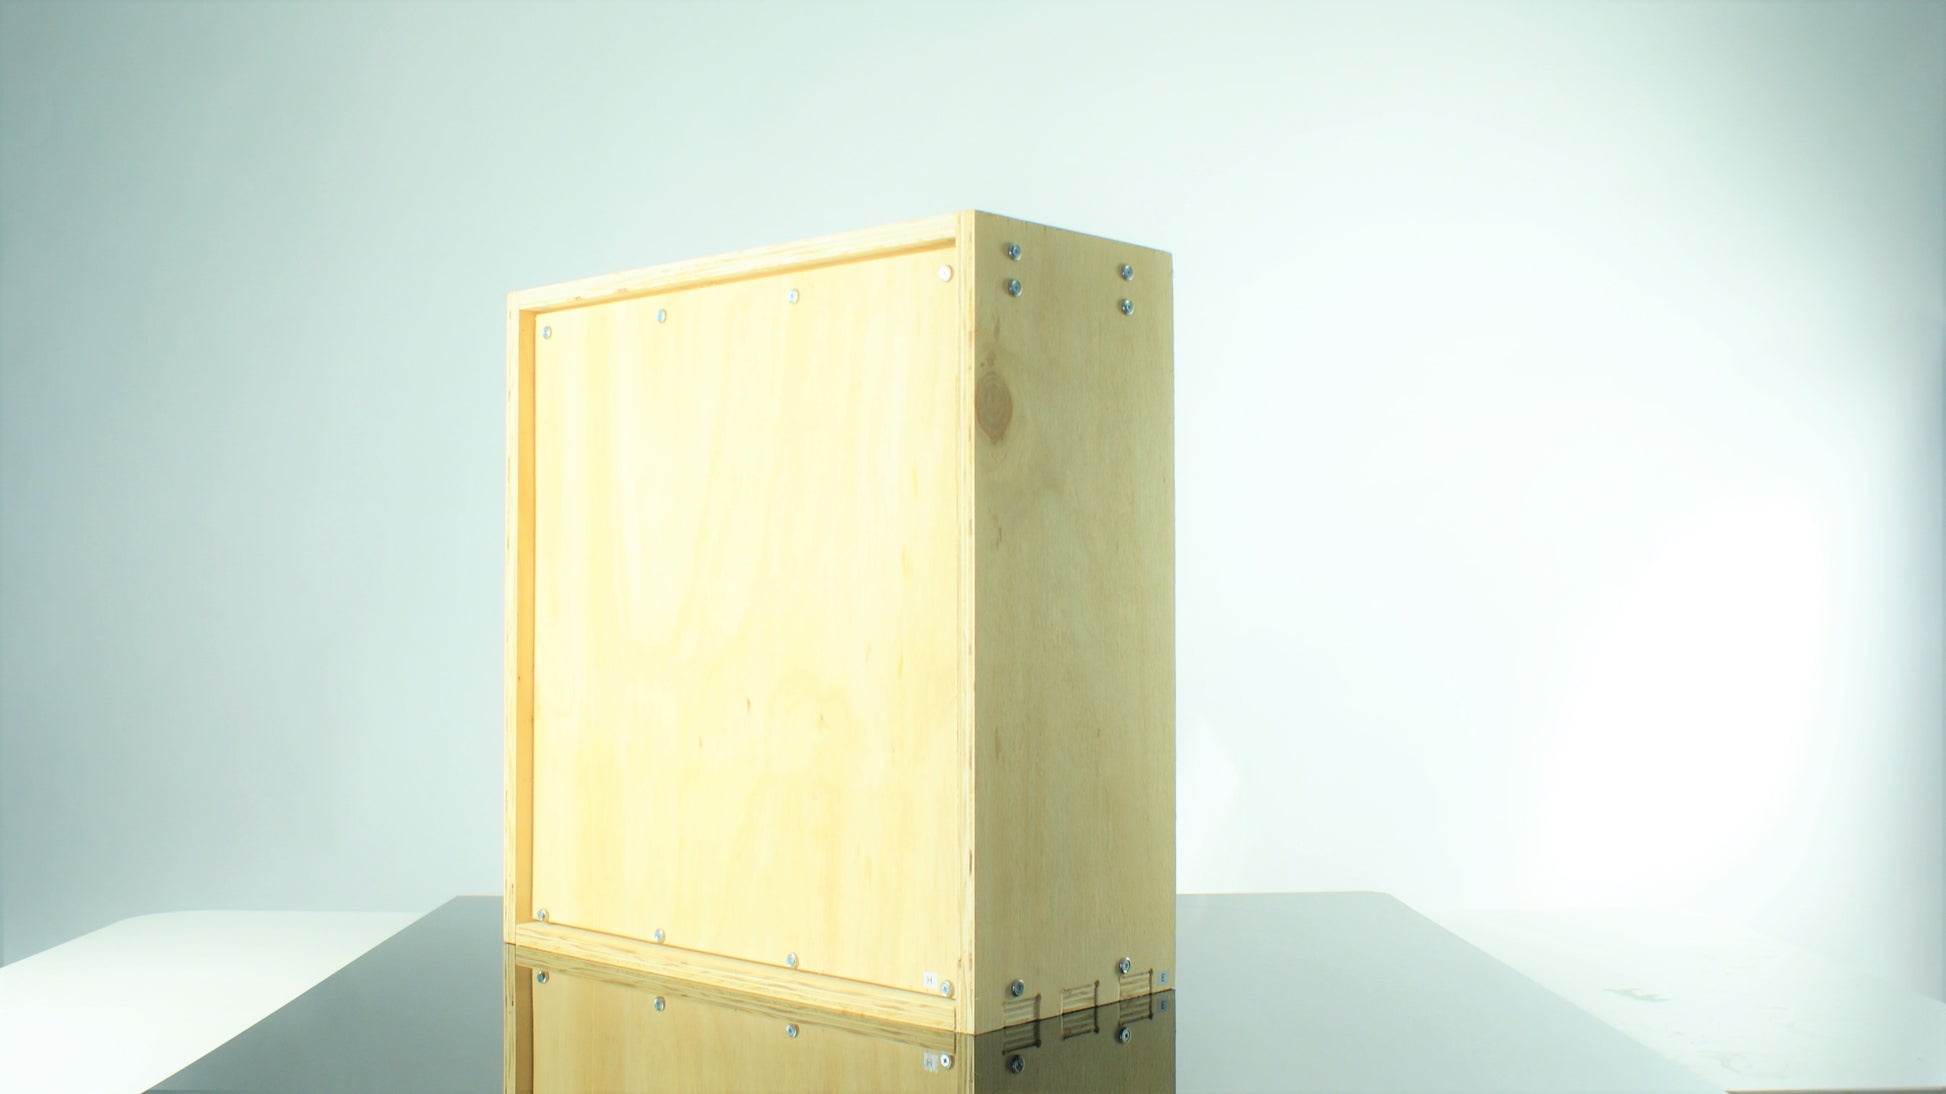 4x10" 18mm Guitar Bass Speaker Cabinet - DIY Self Build Kit